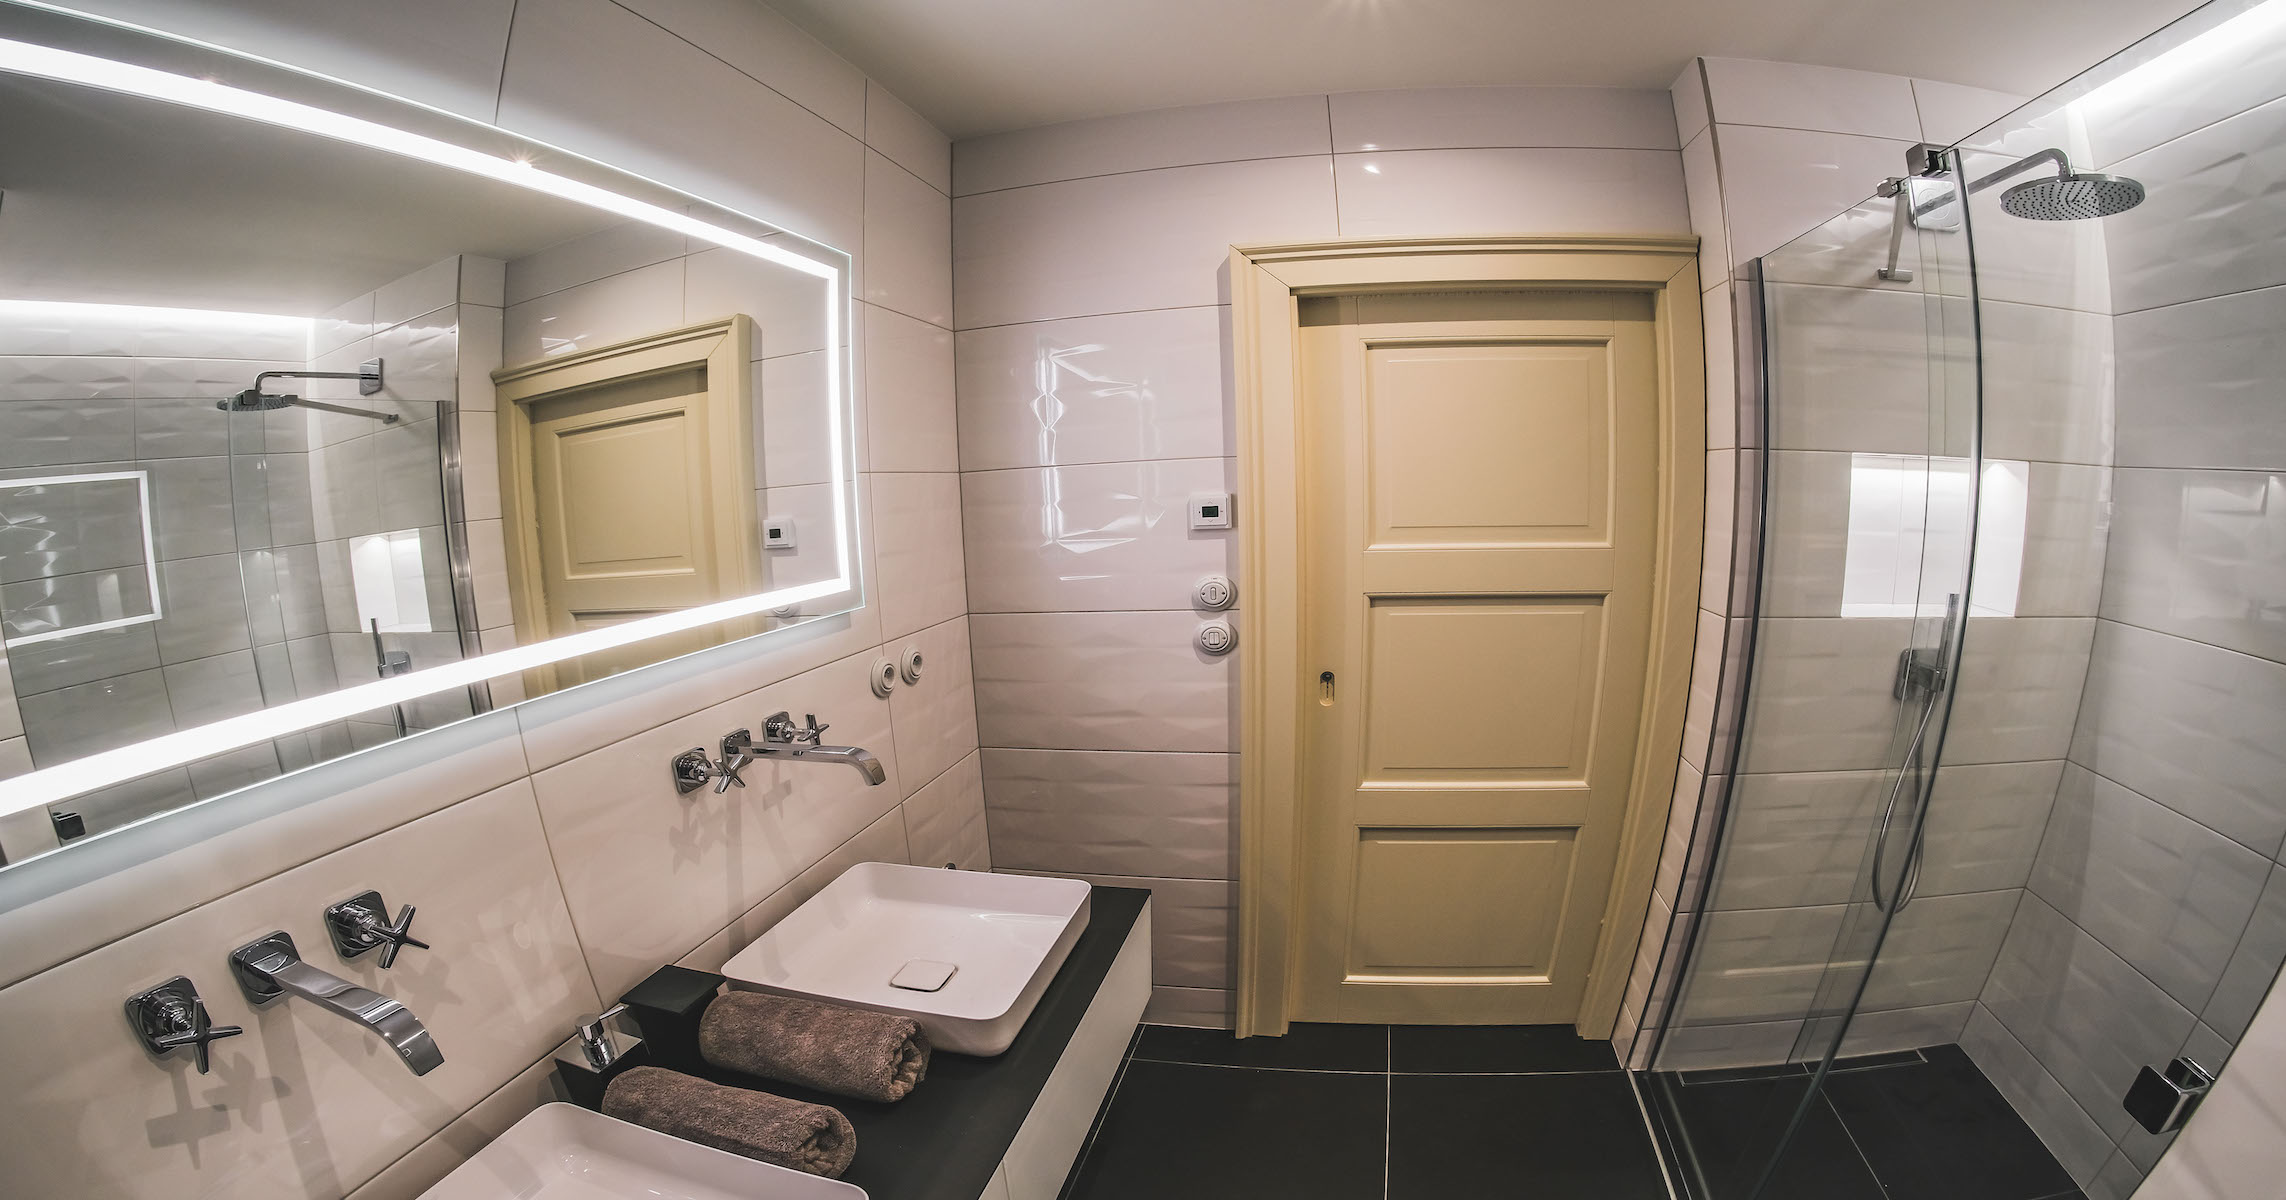 Koupelna s obkladem Blancos od výrobce Pamesa, v designu Brillo blanco